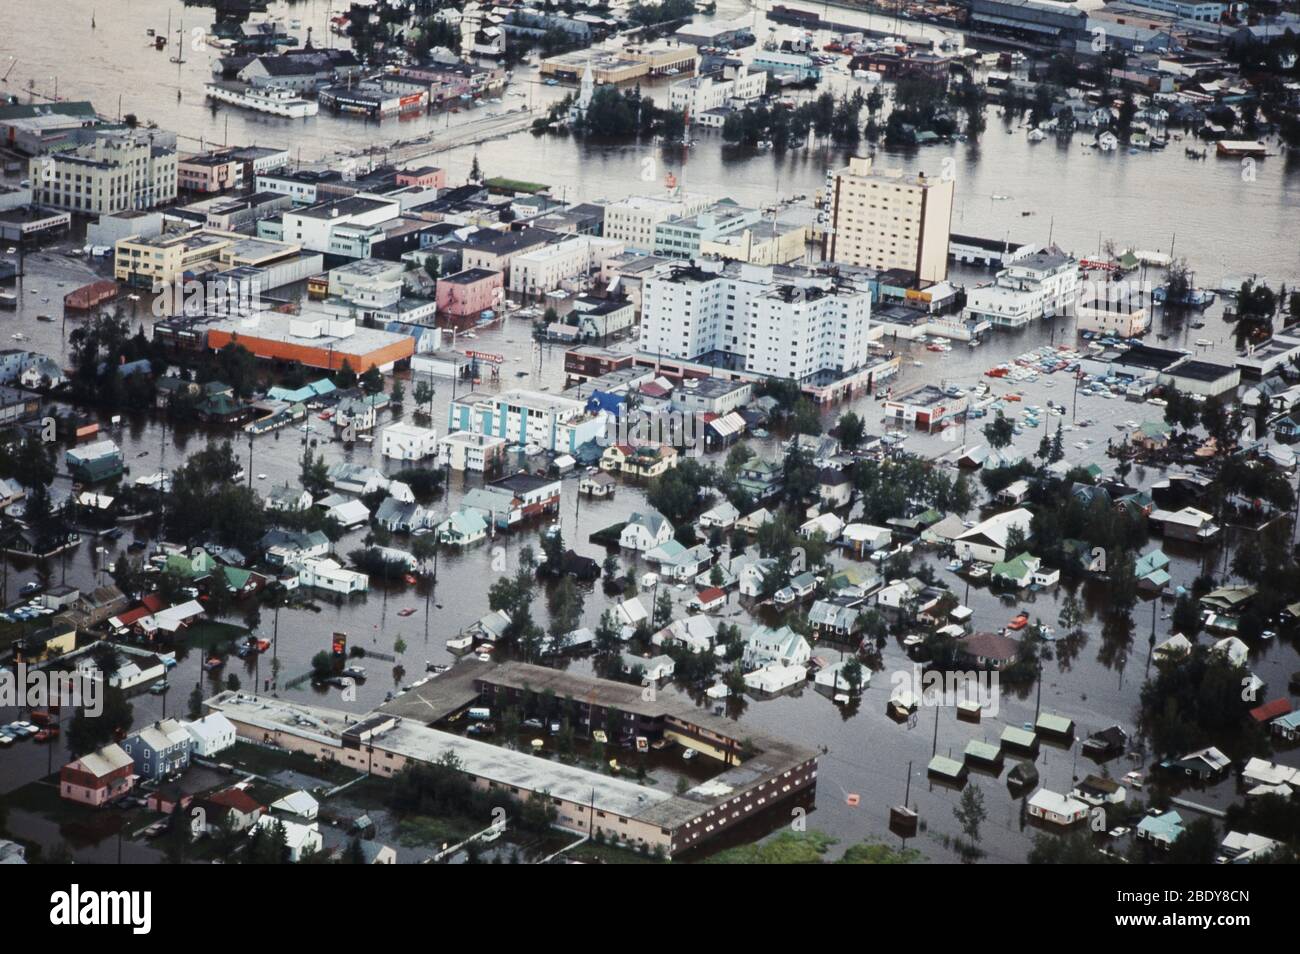 Fairbanks Flood, Alaska, 1967 Stock Photo